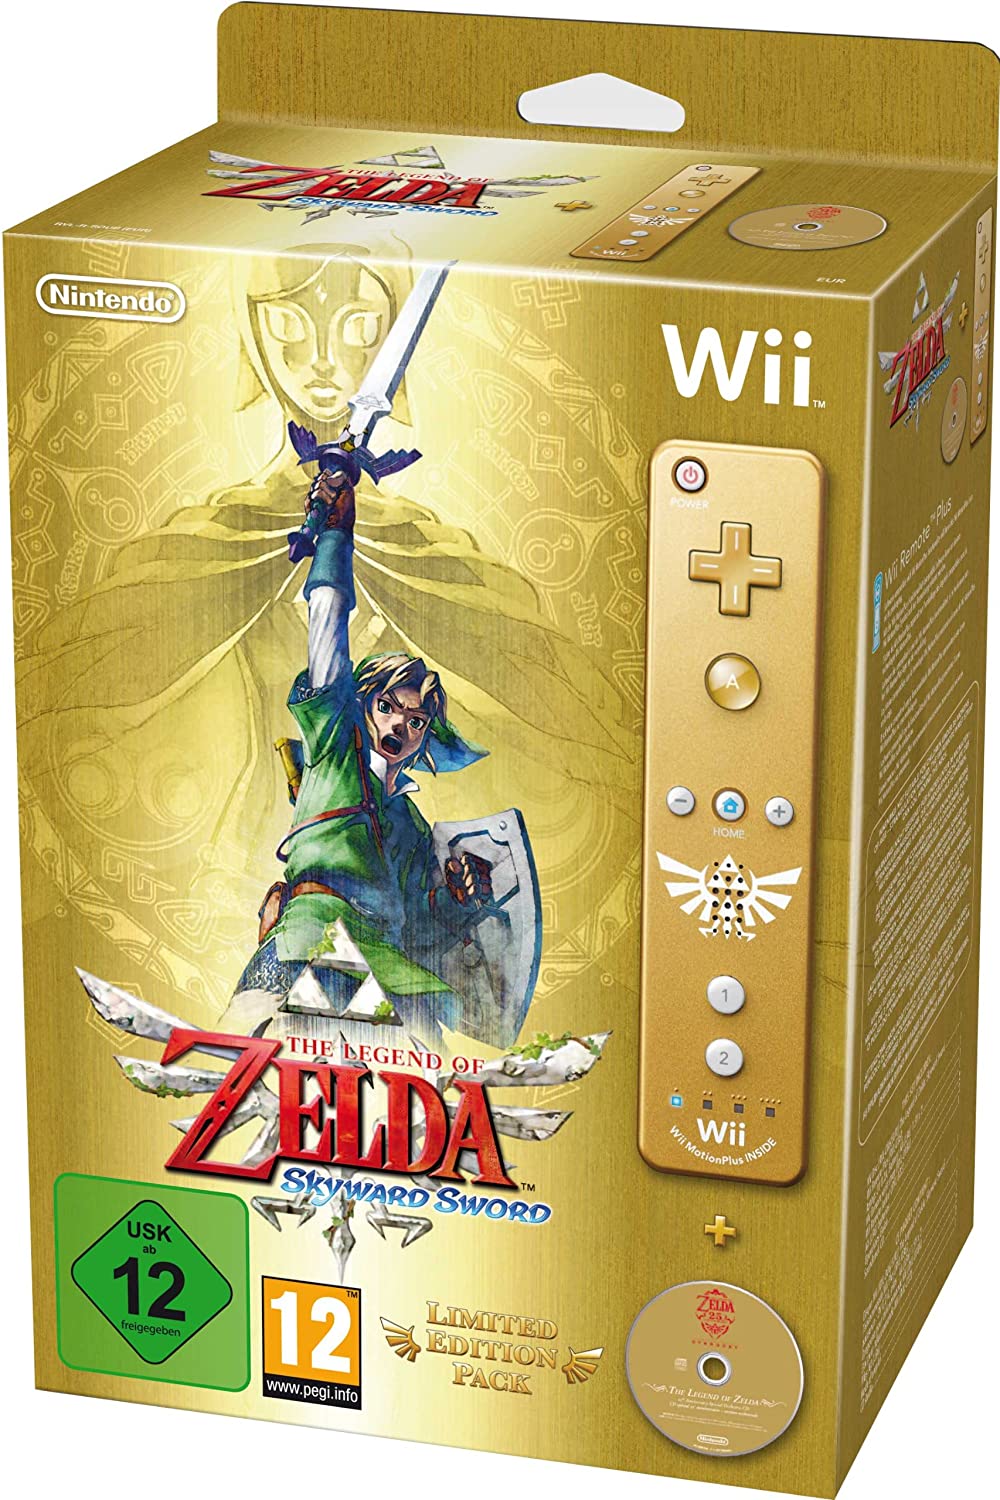 The Legend of Zelda Skyward Sword Limited Edition Pack (újszerű) - Nintendo Wii Játékok